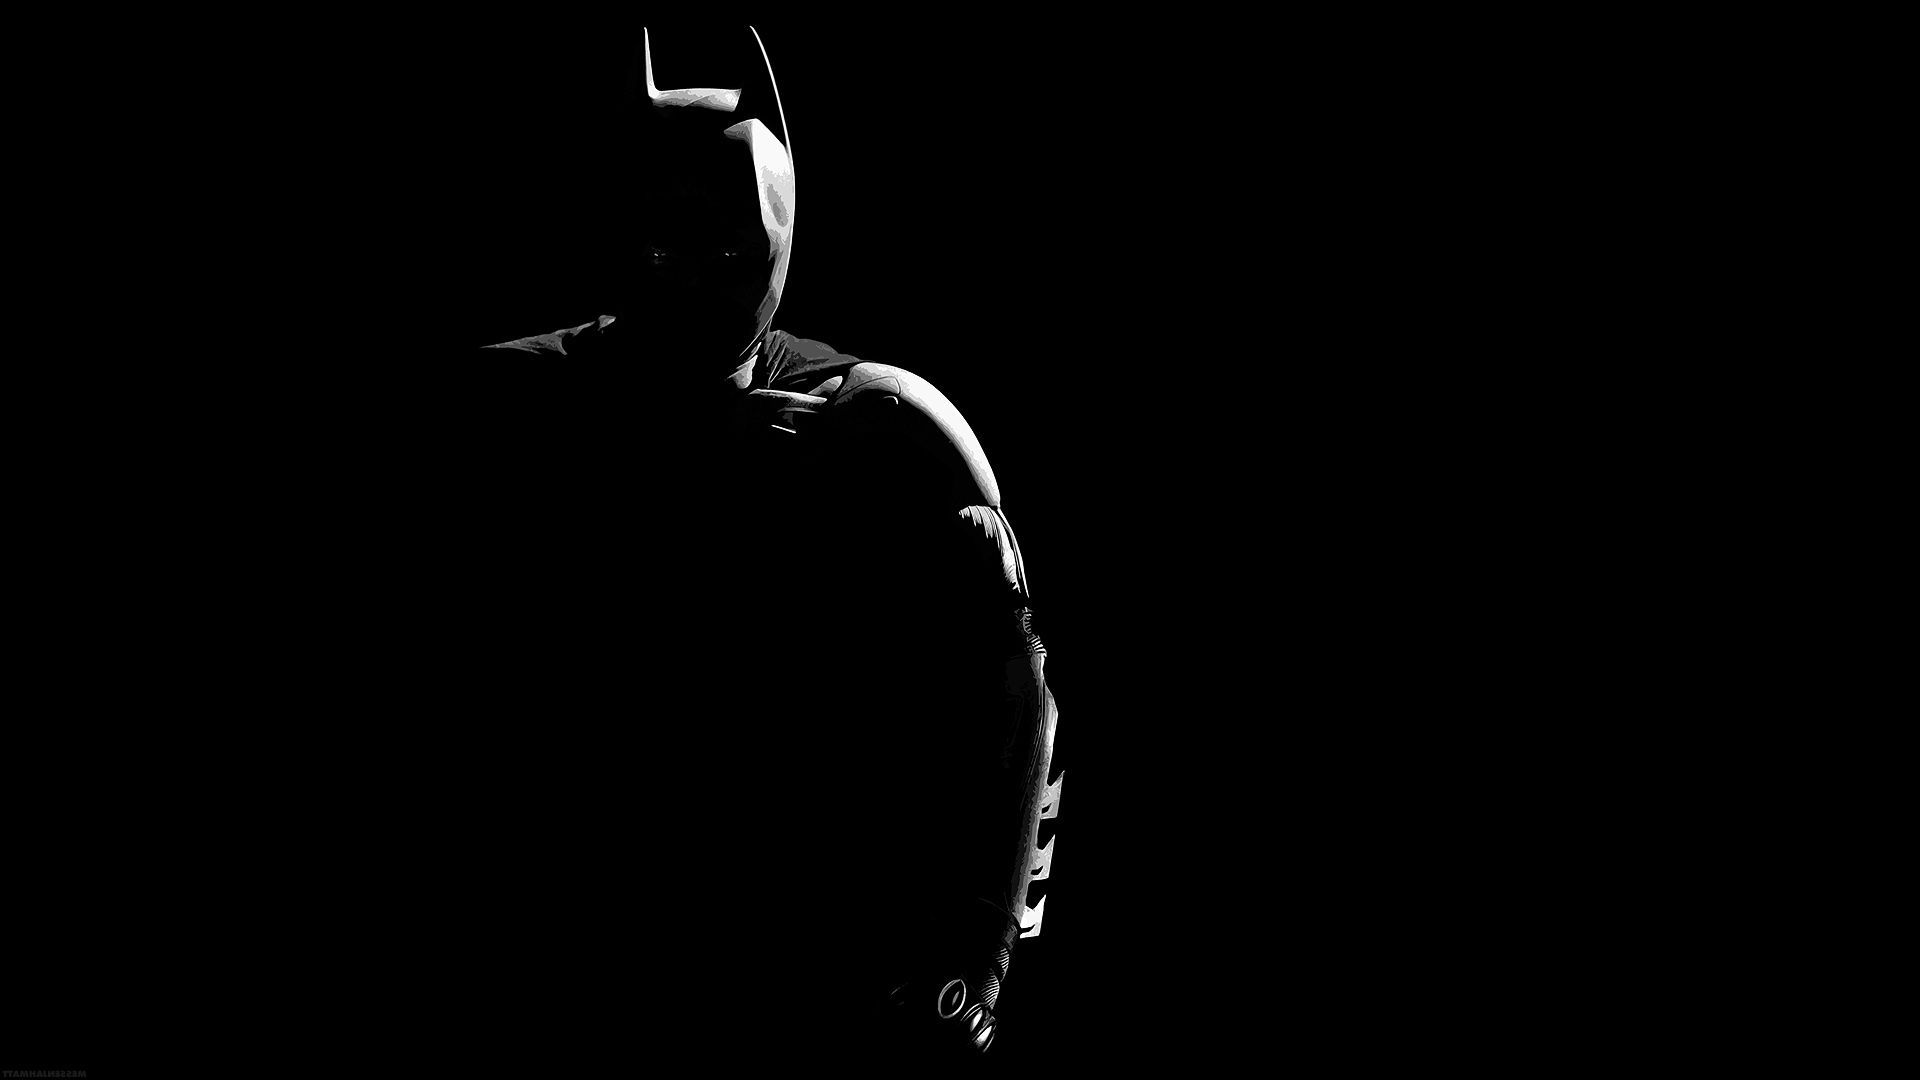 Dark Batman Movies Cover Wallpaper HD With